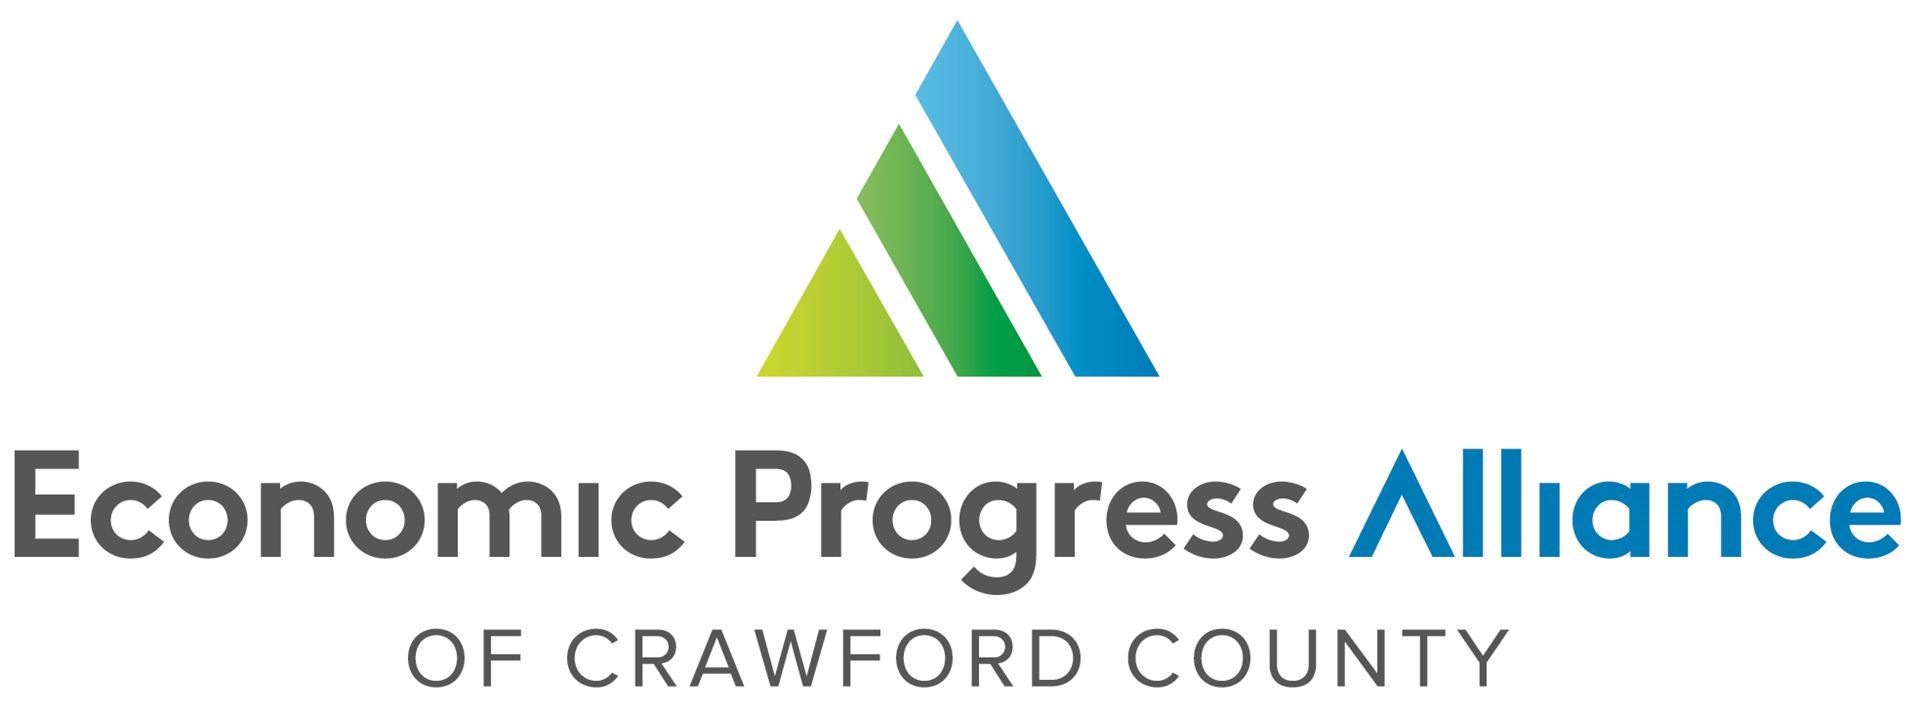 Logo: Economic Preogress Alliance of Crawfrod County